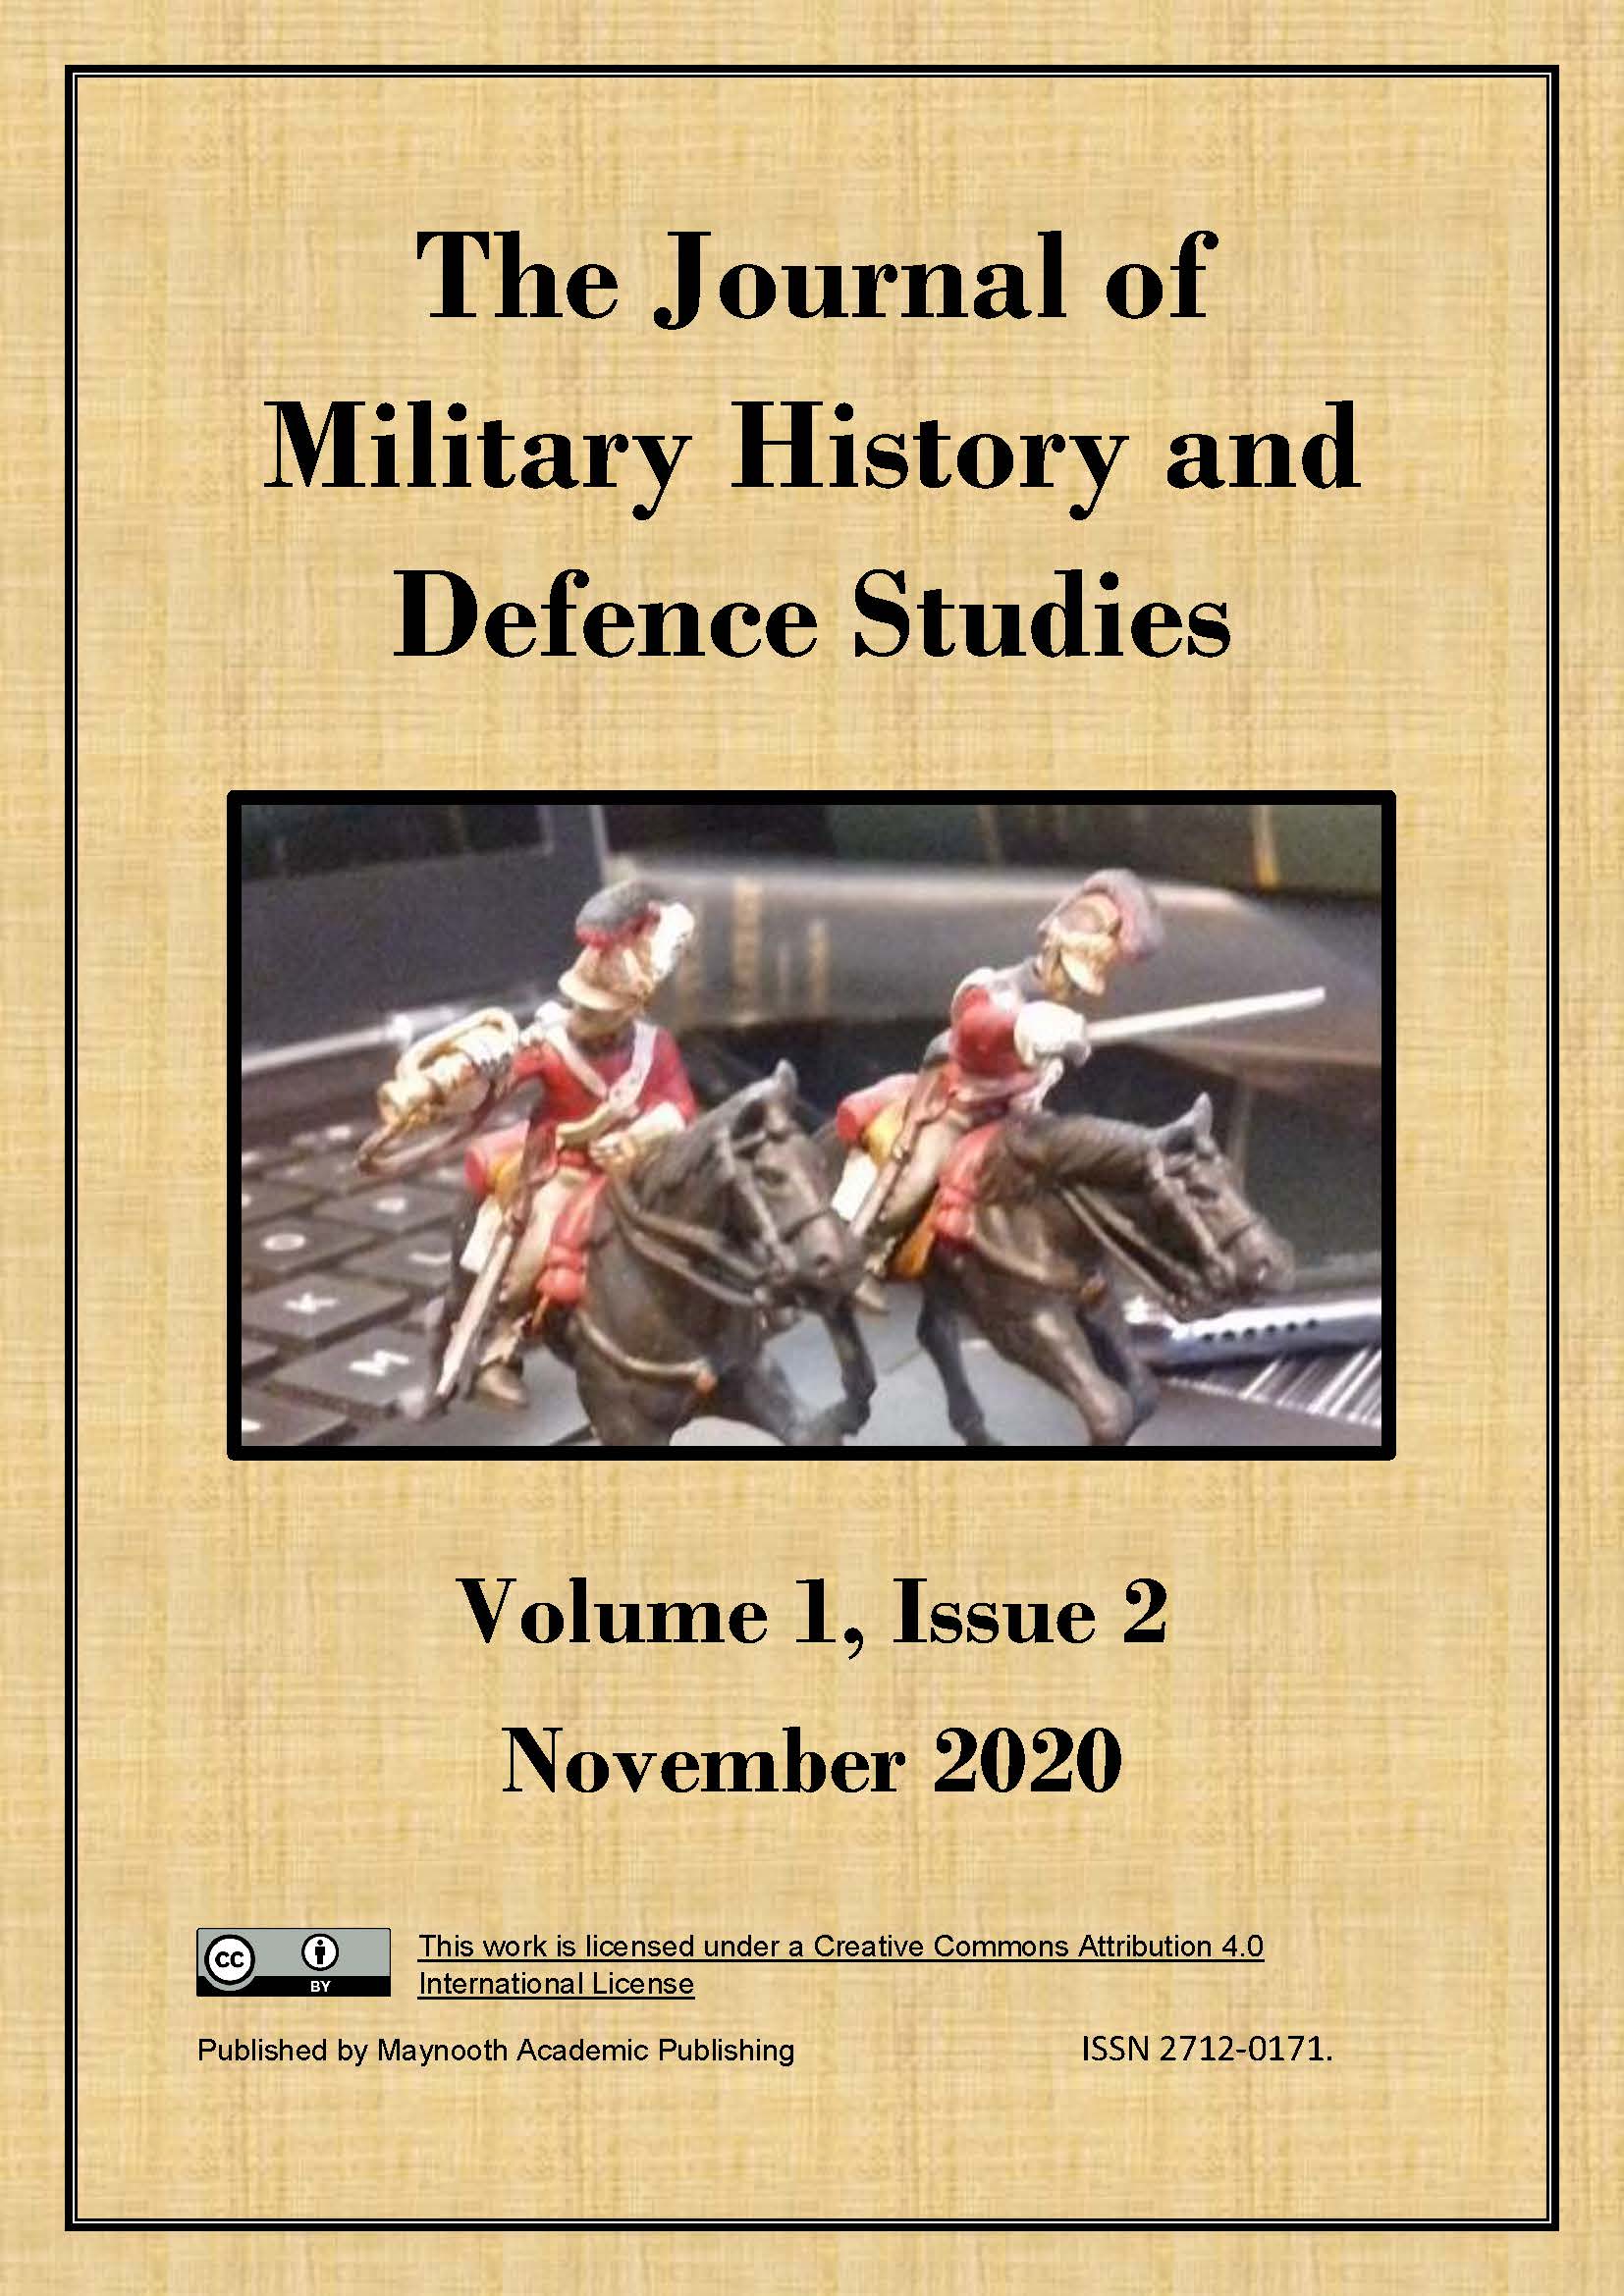 JMHDS Vol 1 Issue 2 Nov 2020